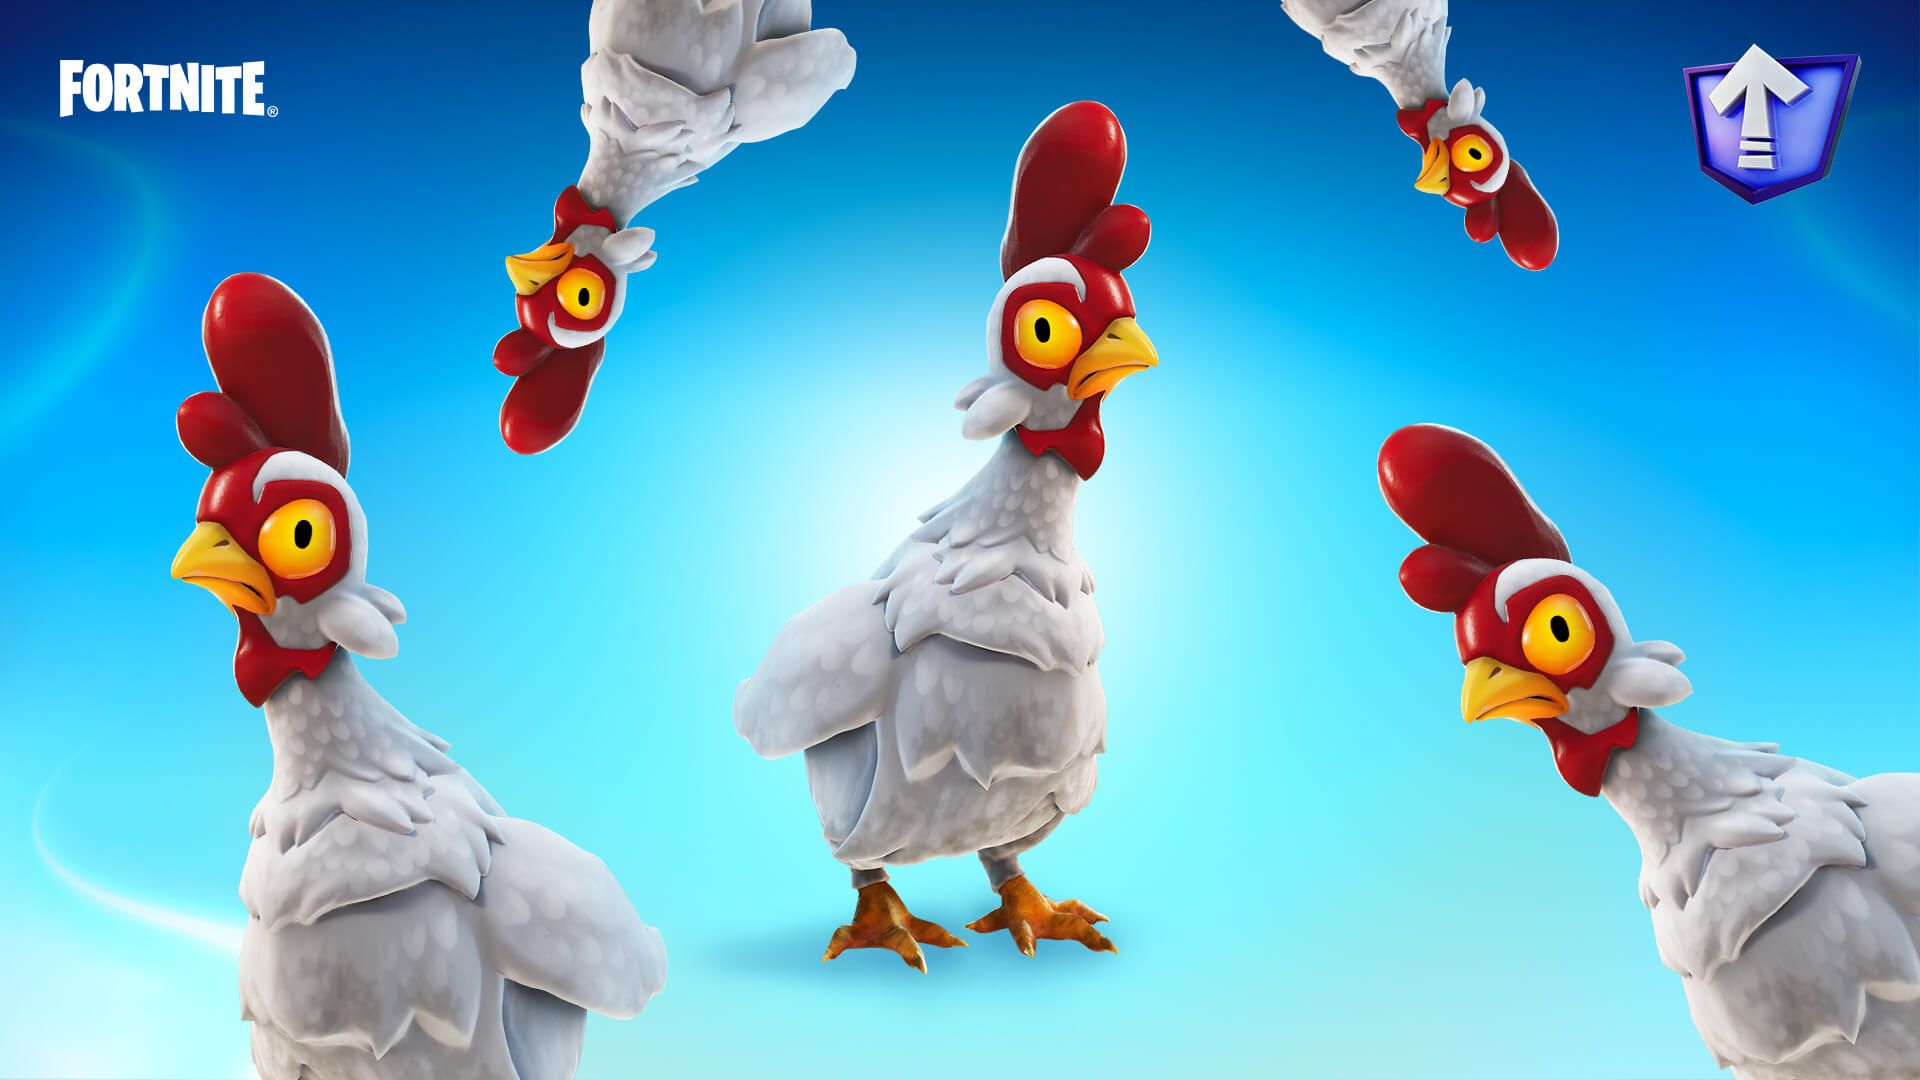 Fortnite Avian Ambush Event Official Art Featuring Fortnite Chickens